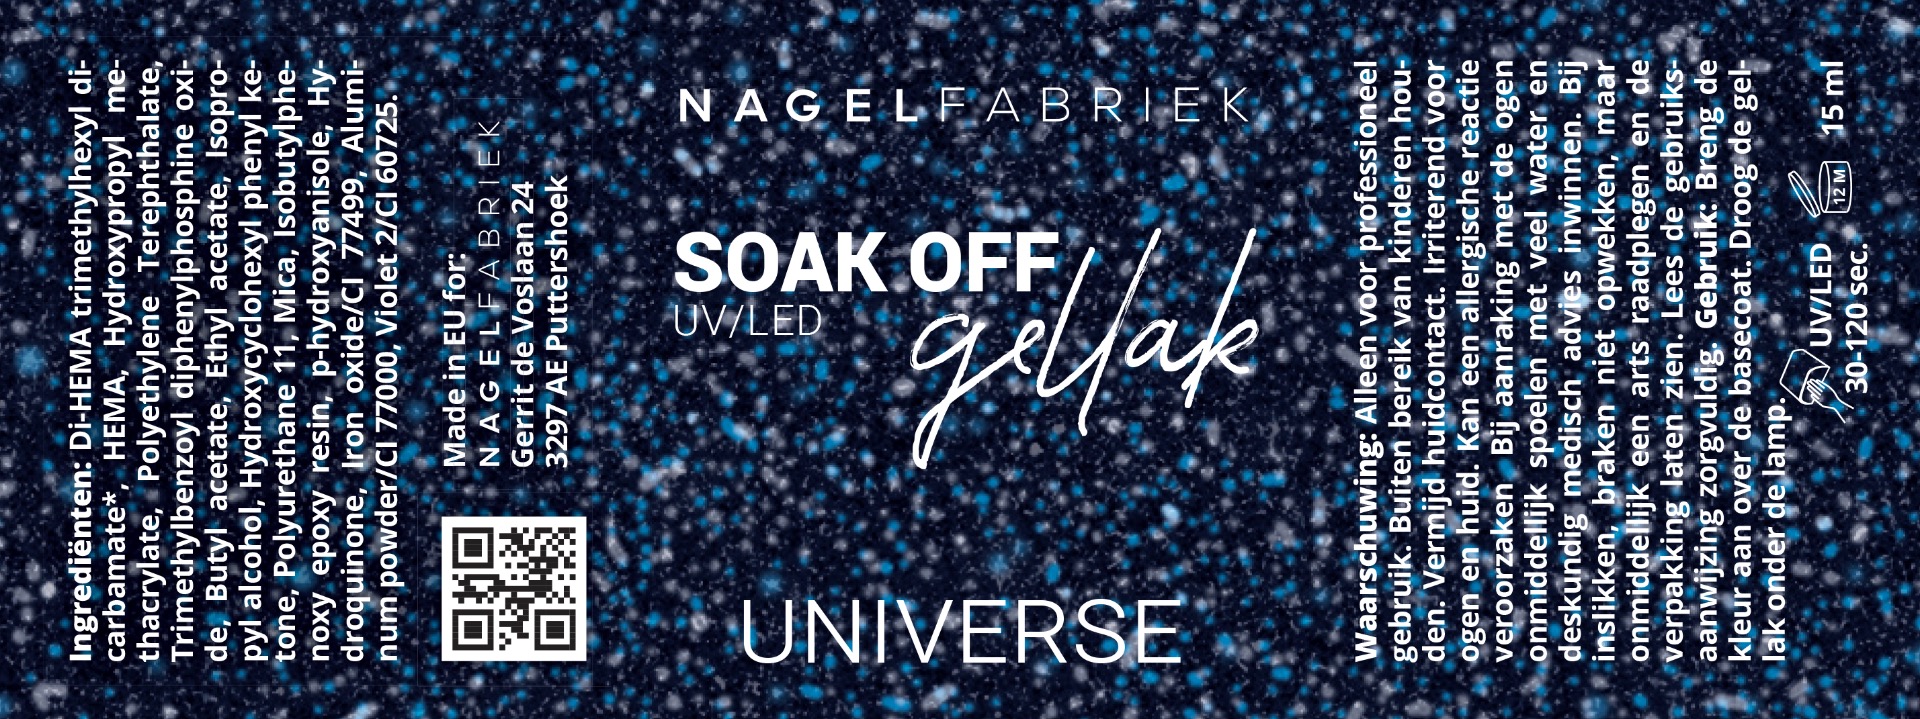 Label Soak Off Gellak Universe 15 ml